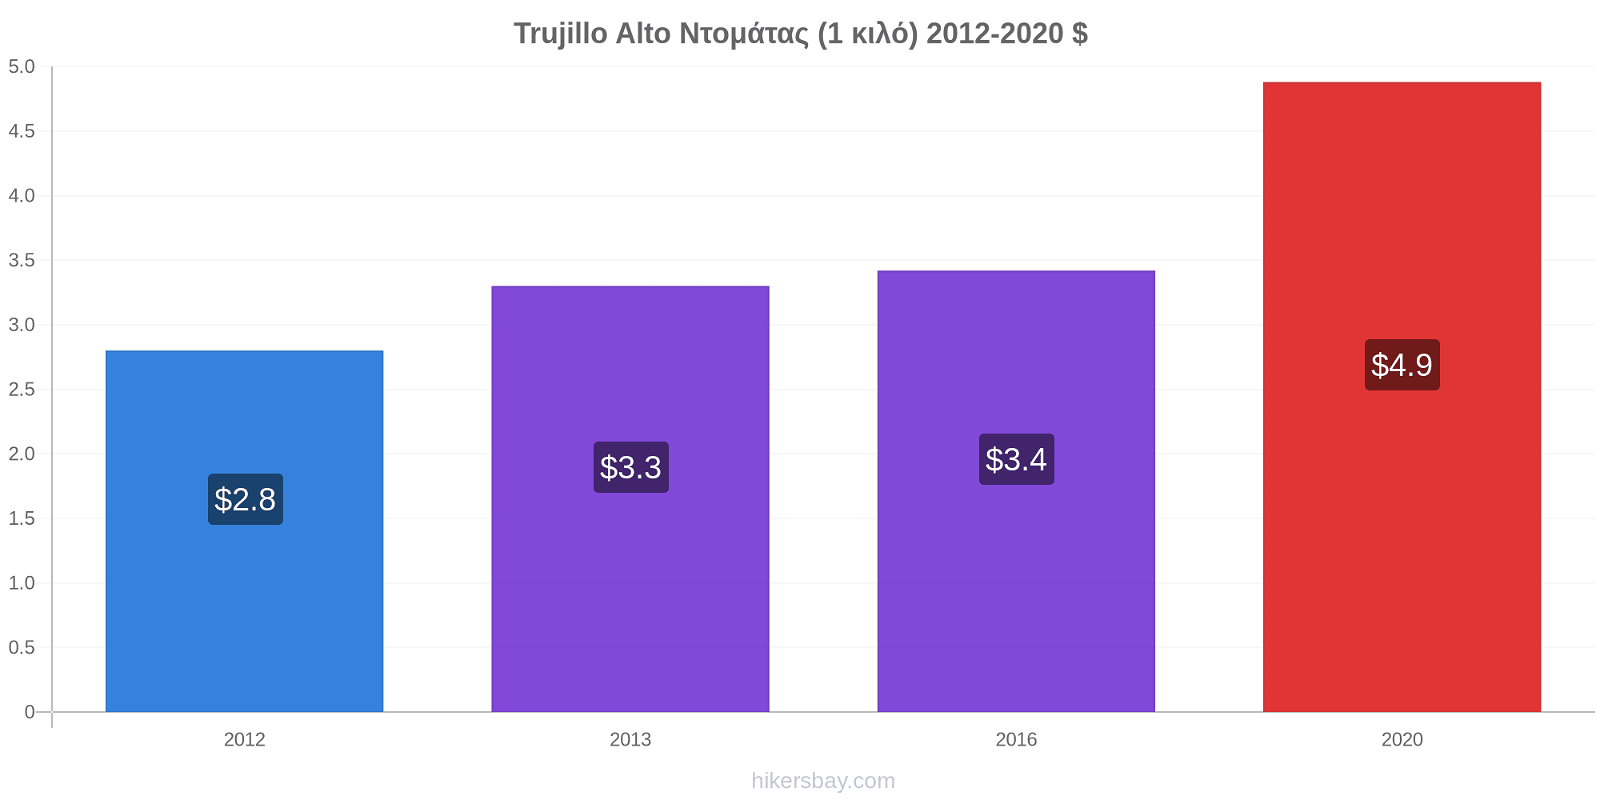 Trujillo Alto αλλαγές τιμών Ντομάτας (1 κιλό) hikersbay.com